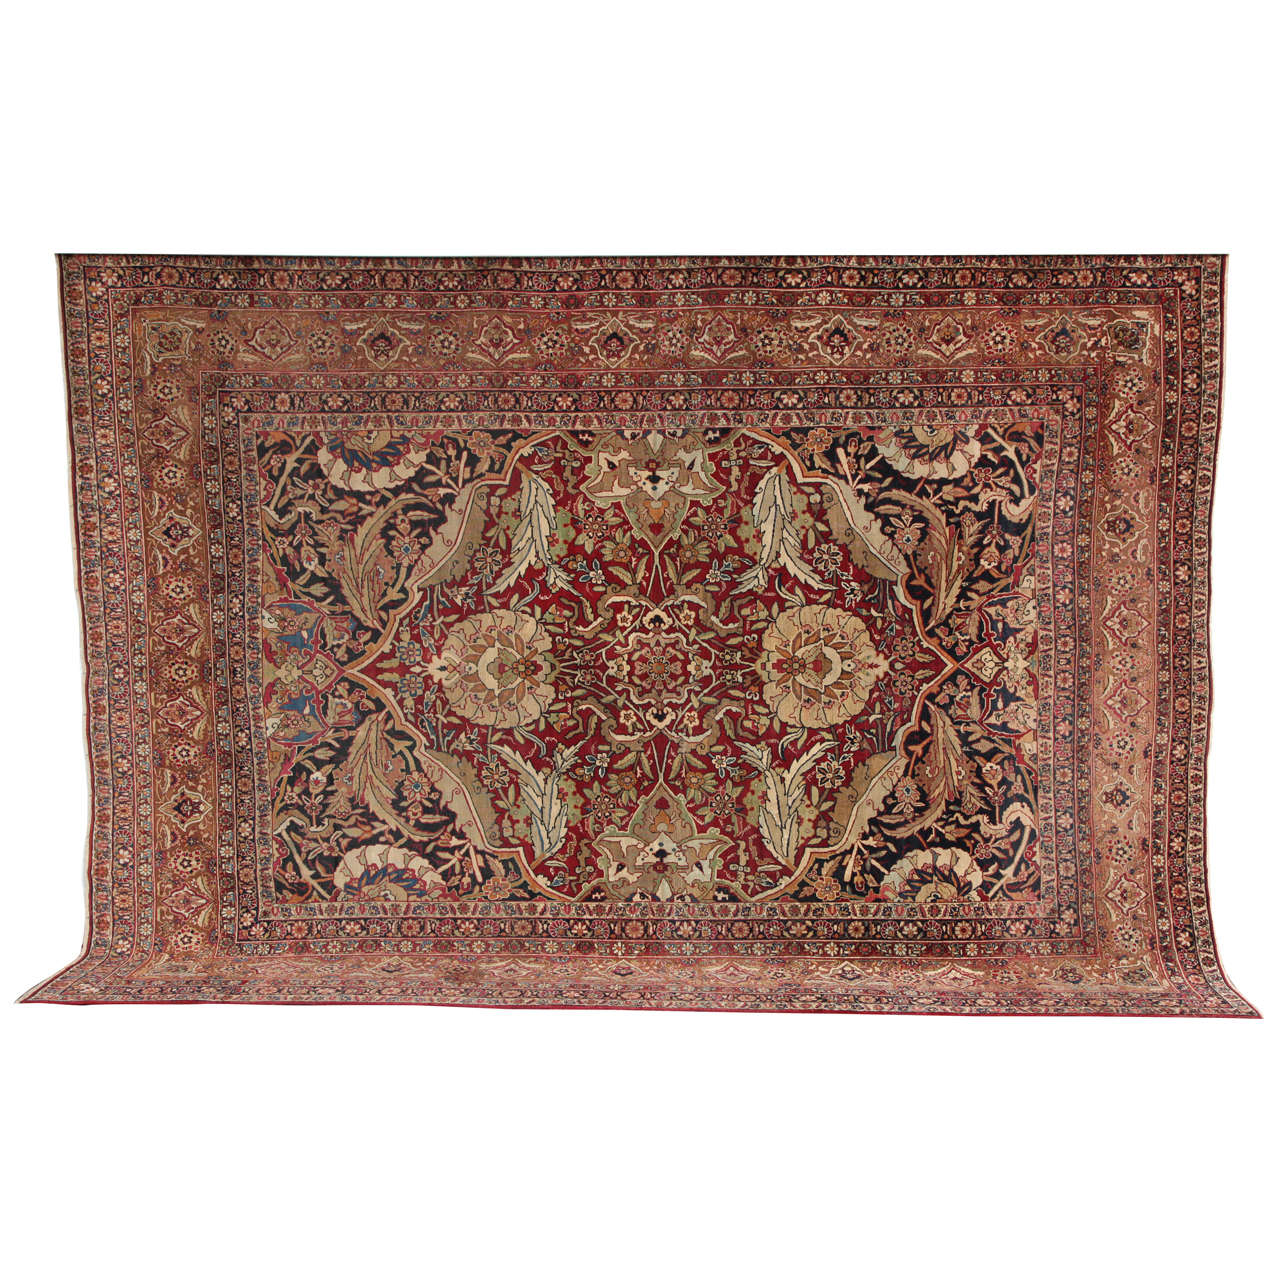 Antique 1890s Persian Kermanshah Rug, Wool, 9' x 12' For Sale